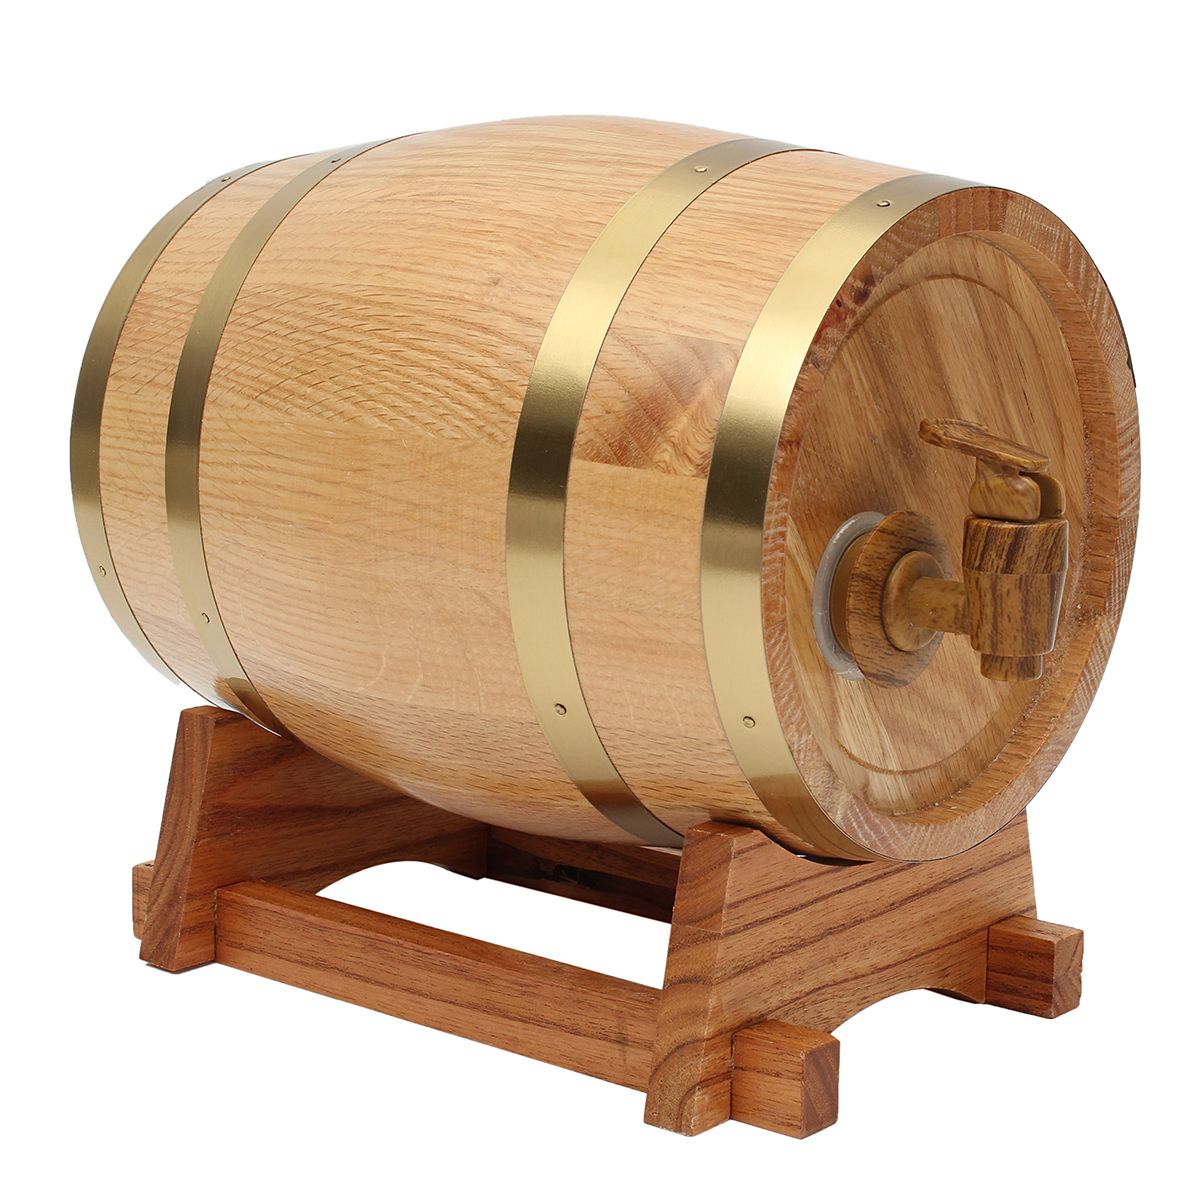 3L-Wooden-Barrel-with-Spigot-for-Whisky-Wine-Liquor-Homebrew-1138857